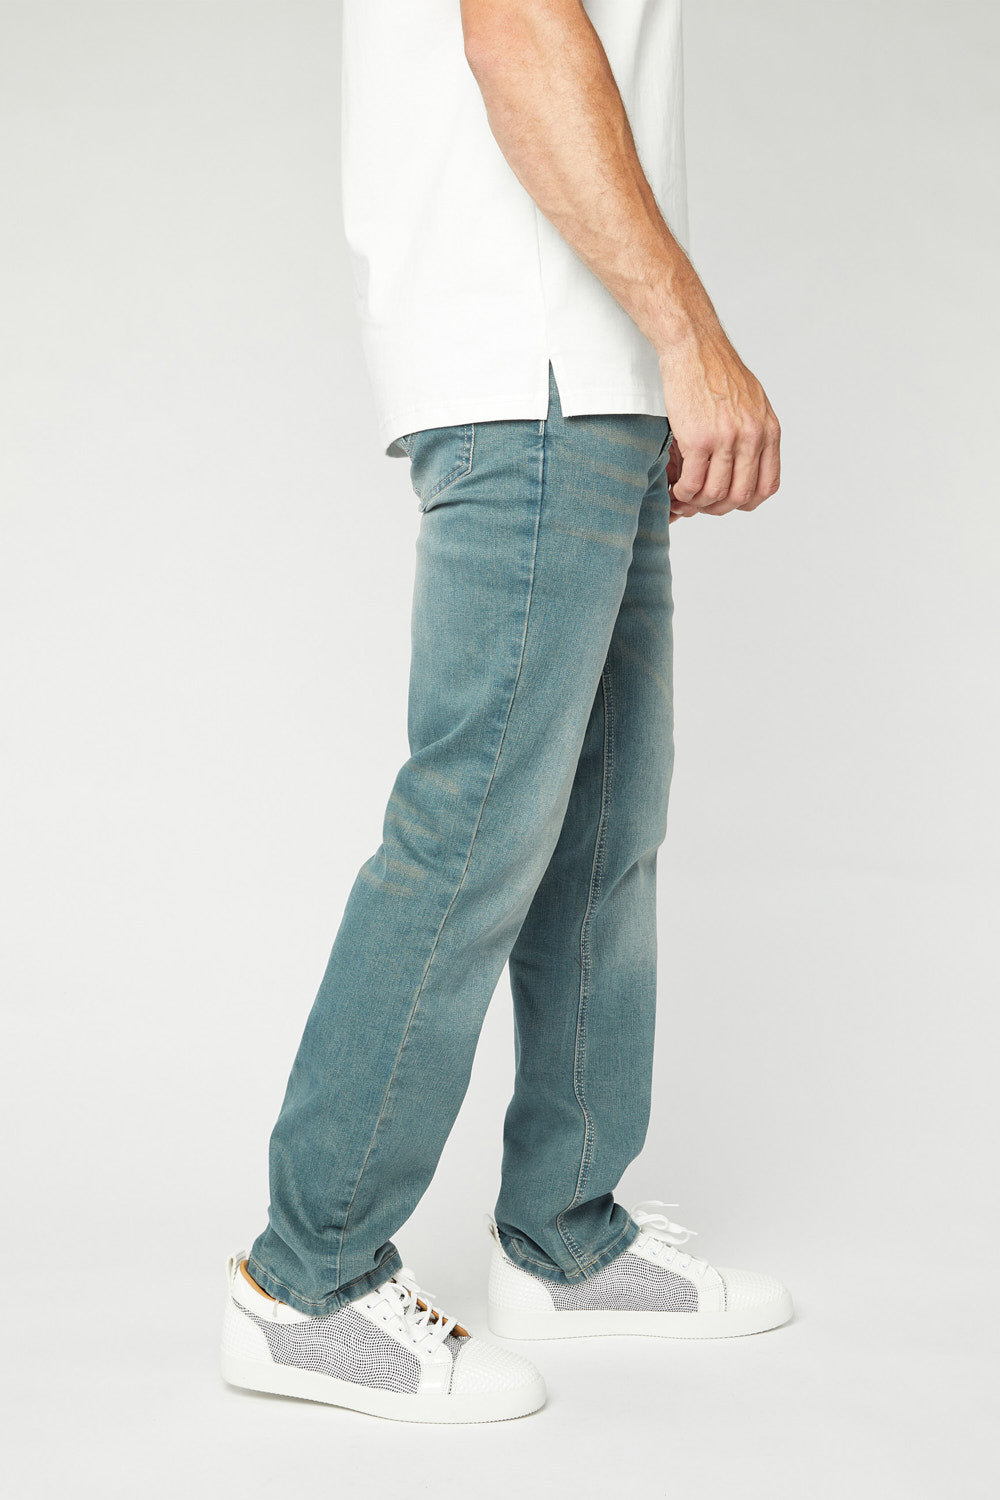 Pax Men's Lt Blue Slim Stretch Jeans